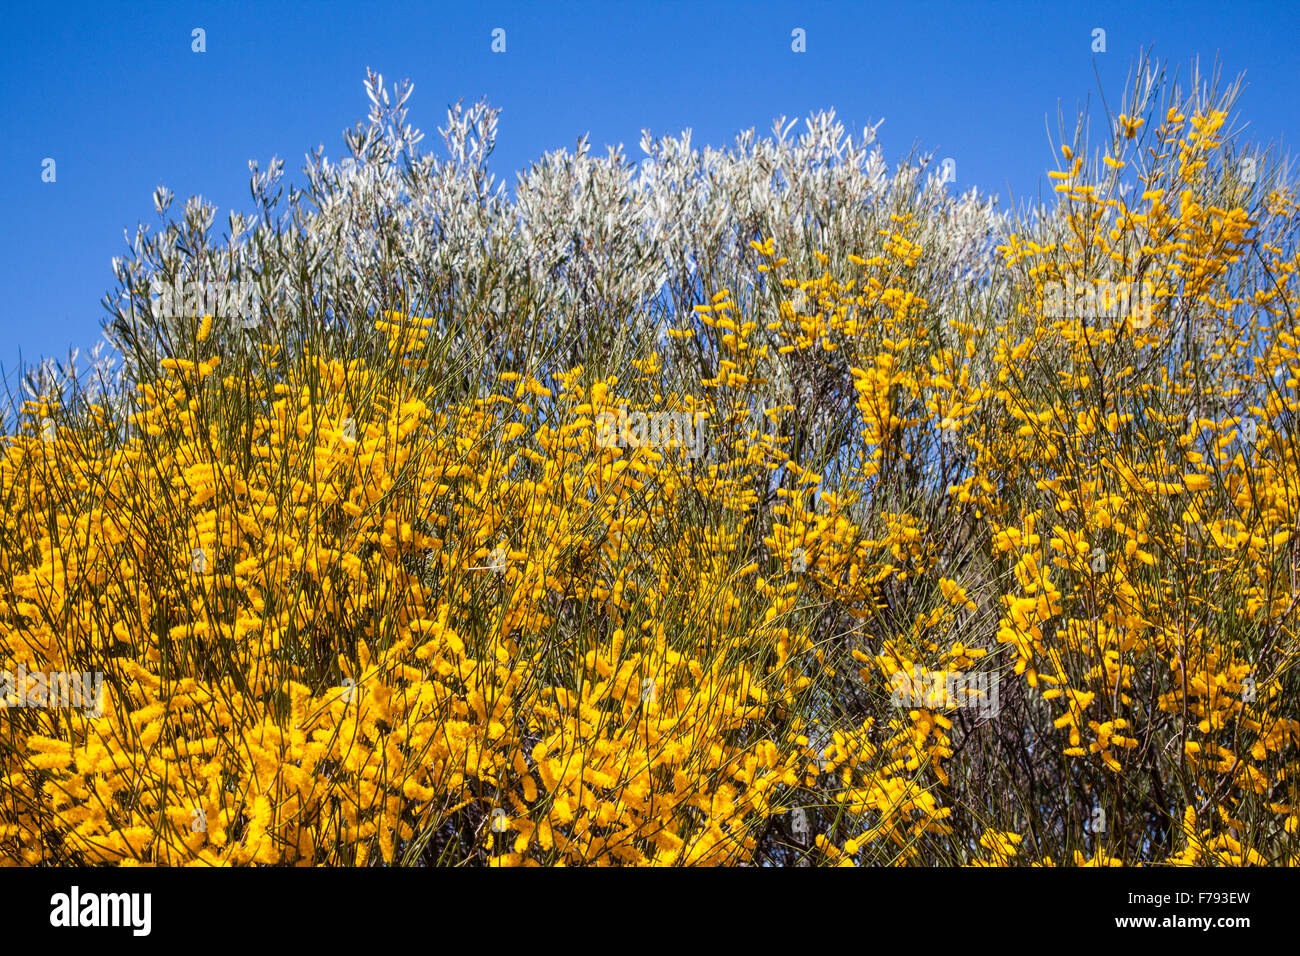 Australia, Western Australia, Mid West, Murchison District, Spiked Wattle shrub, Acacia multispicata near Mullewa Stock Photo